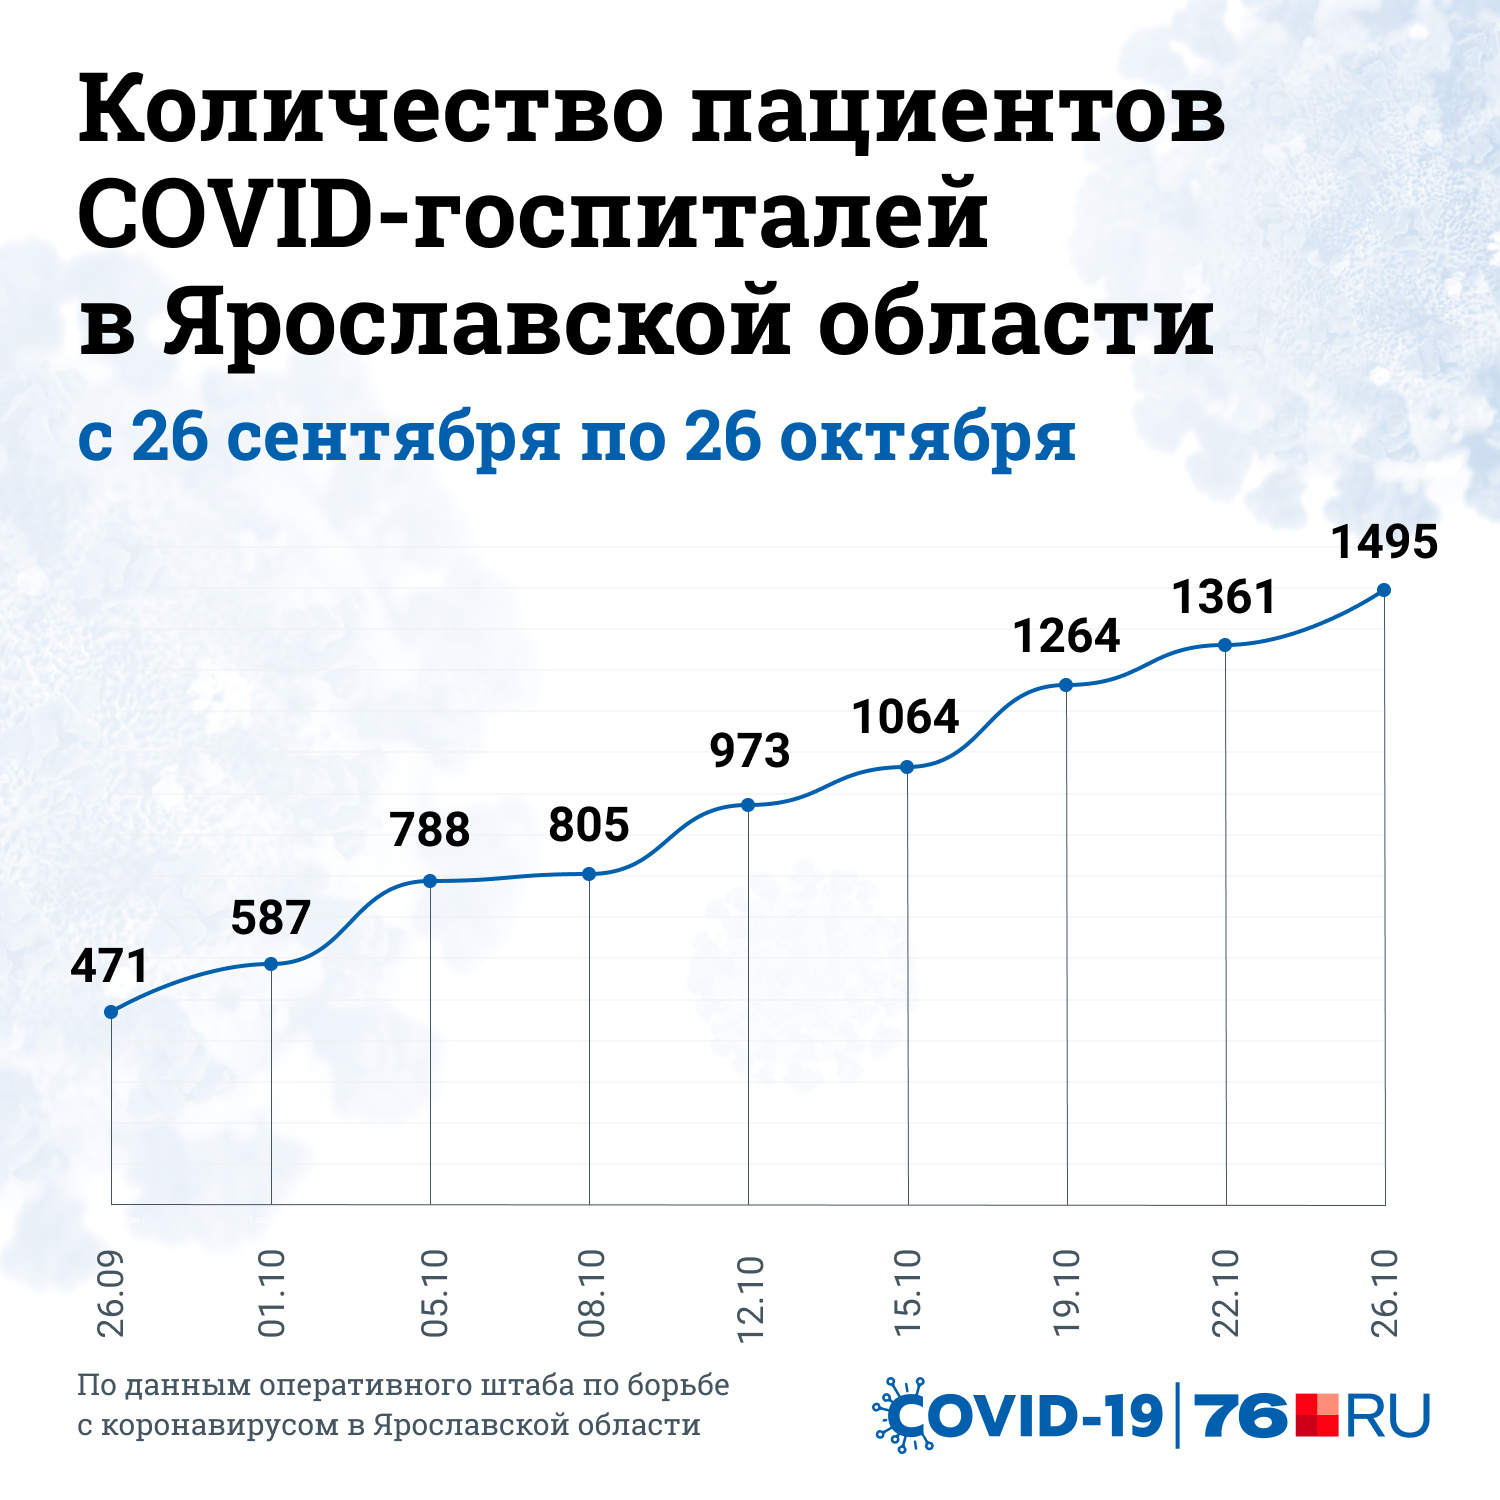 Количество пациентов COVID-госпиталей в Ярославской области за месяц увеличилось в три раза